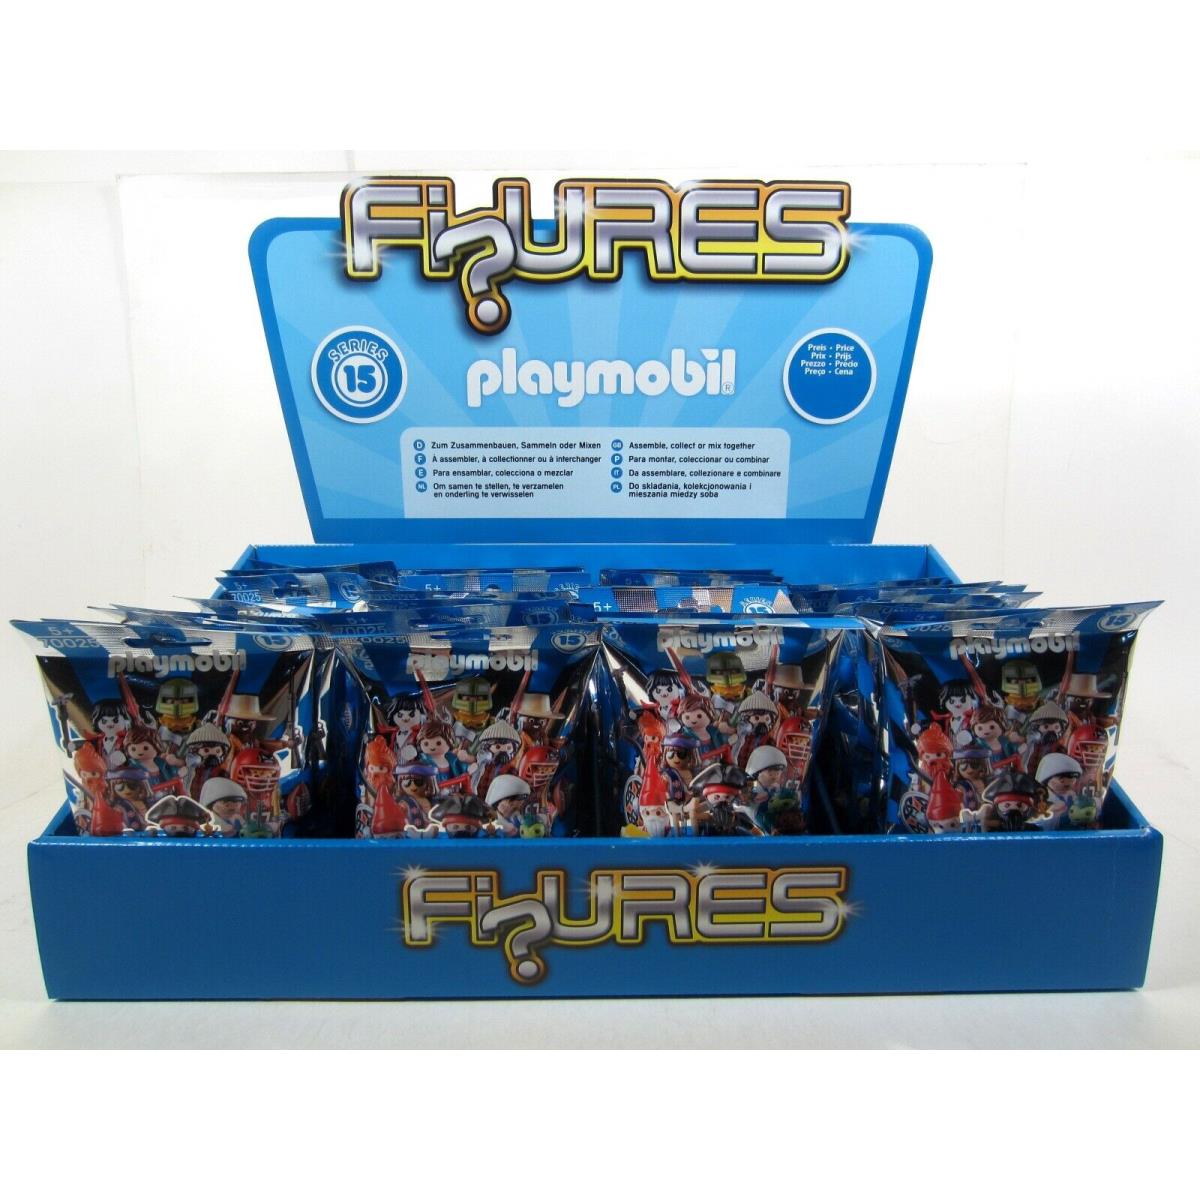 Playmobil 70025 Boys Series 15 Mini Figure Case of 48 Mystery Blind Bags 10220